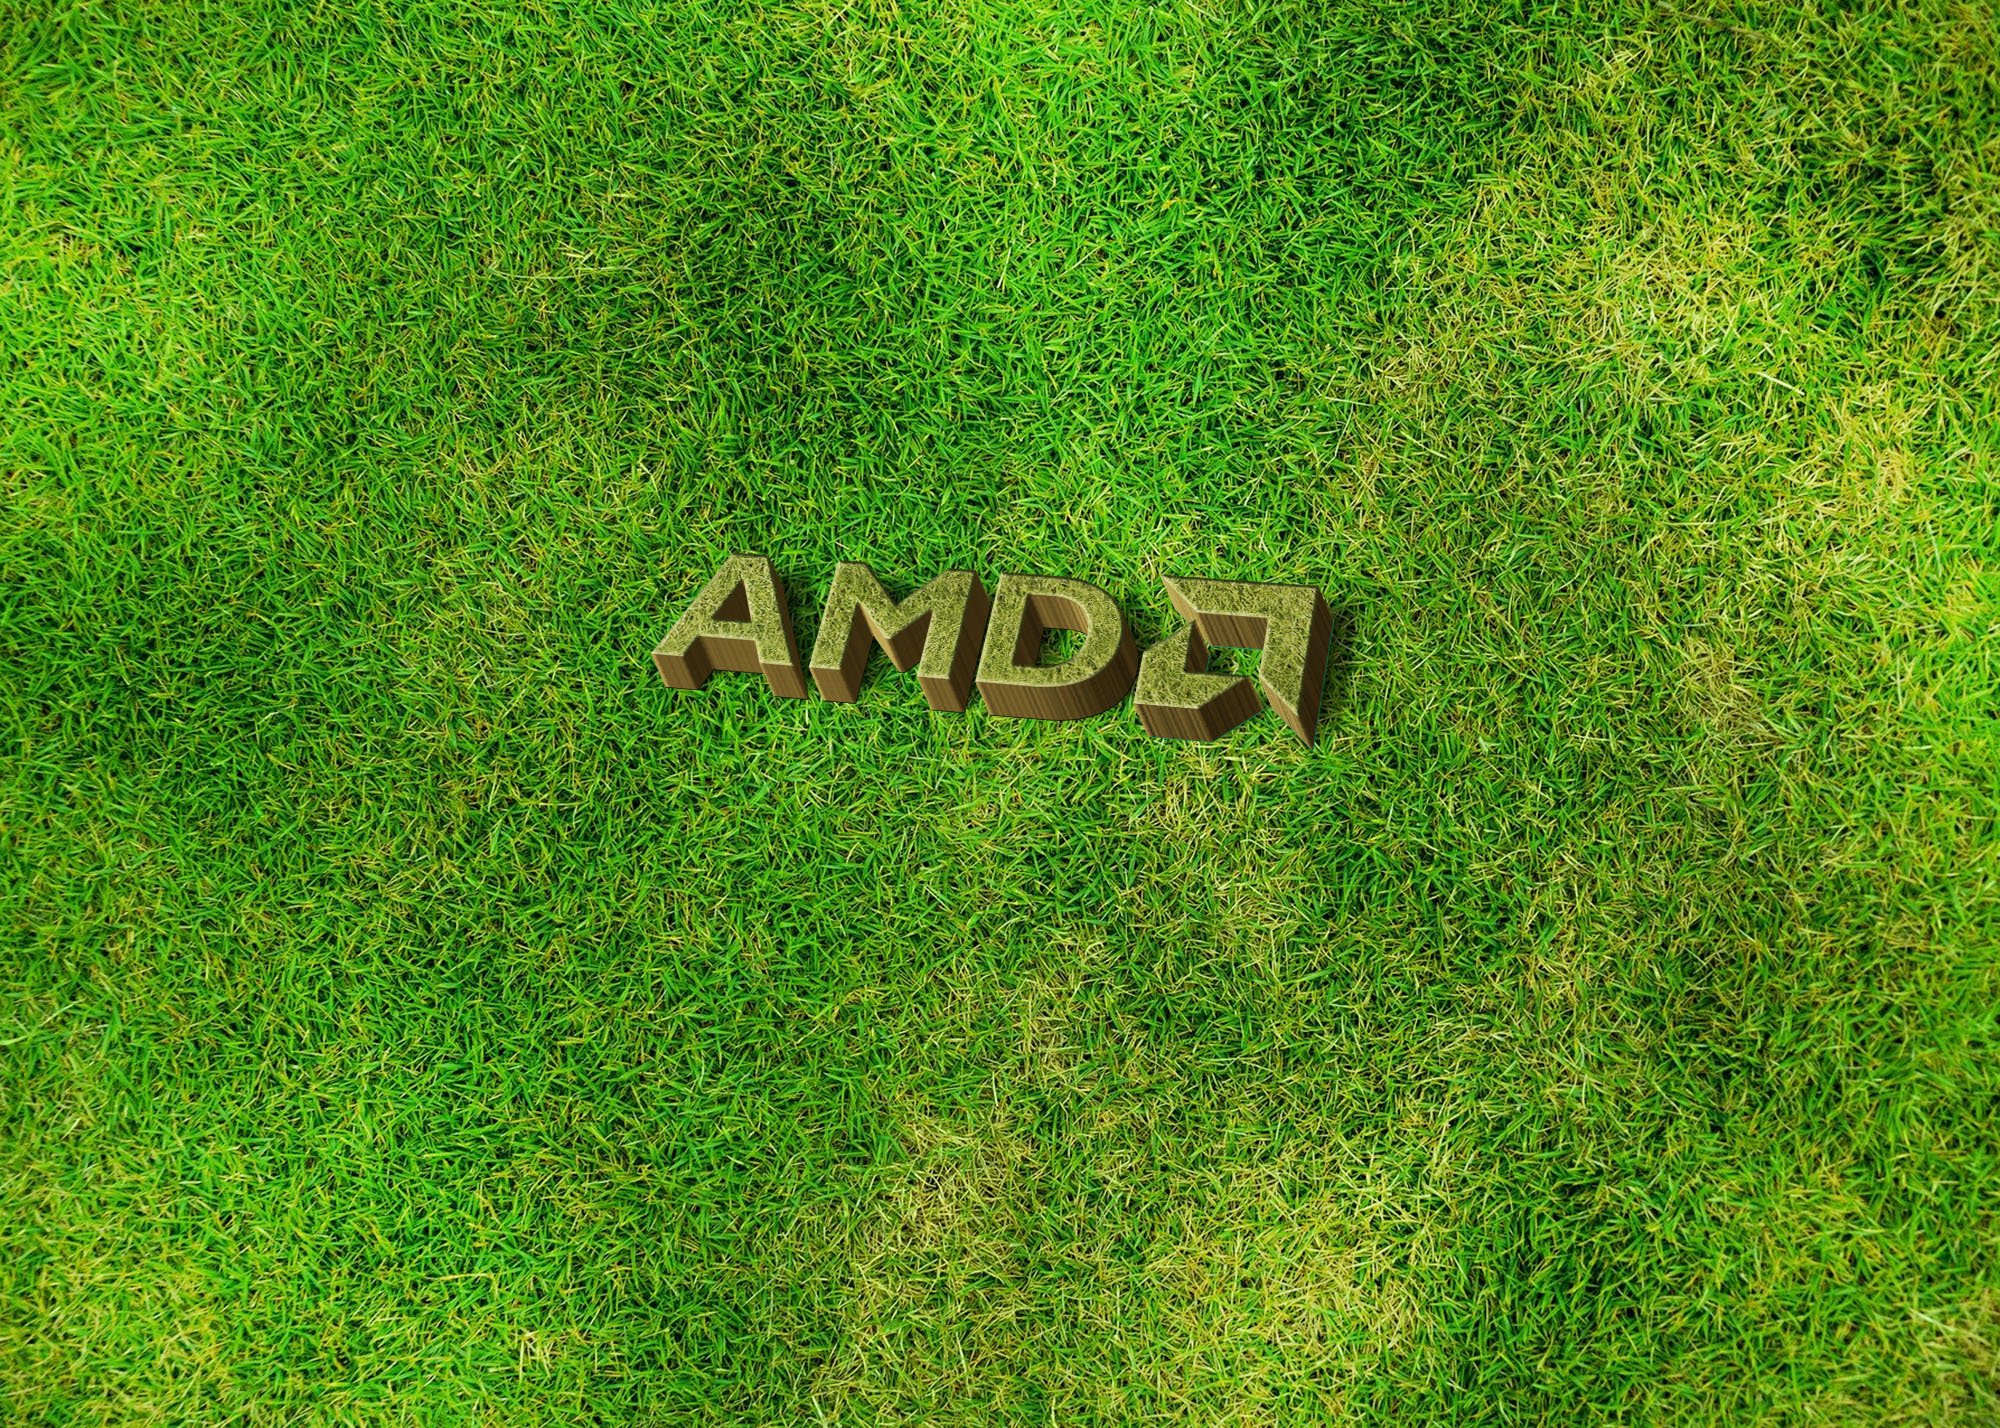 AMD Logo on grass mockup